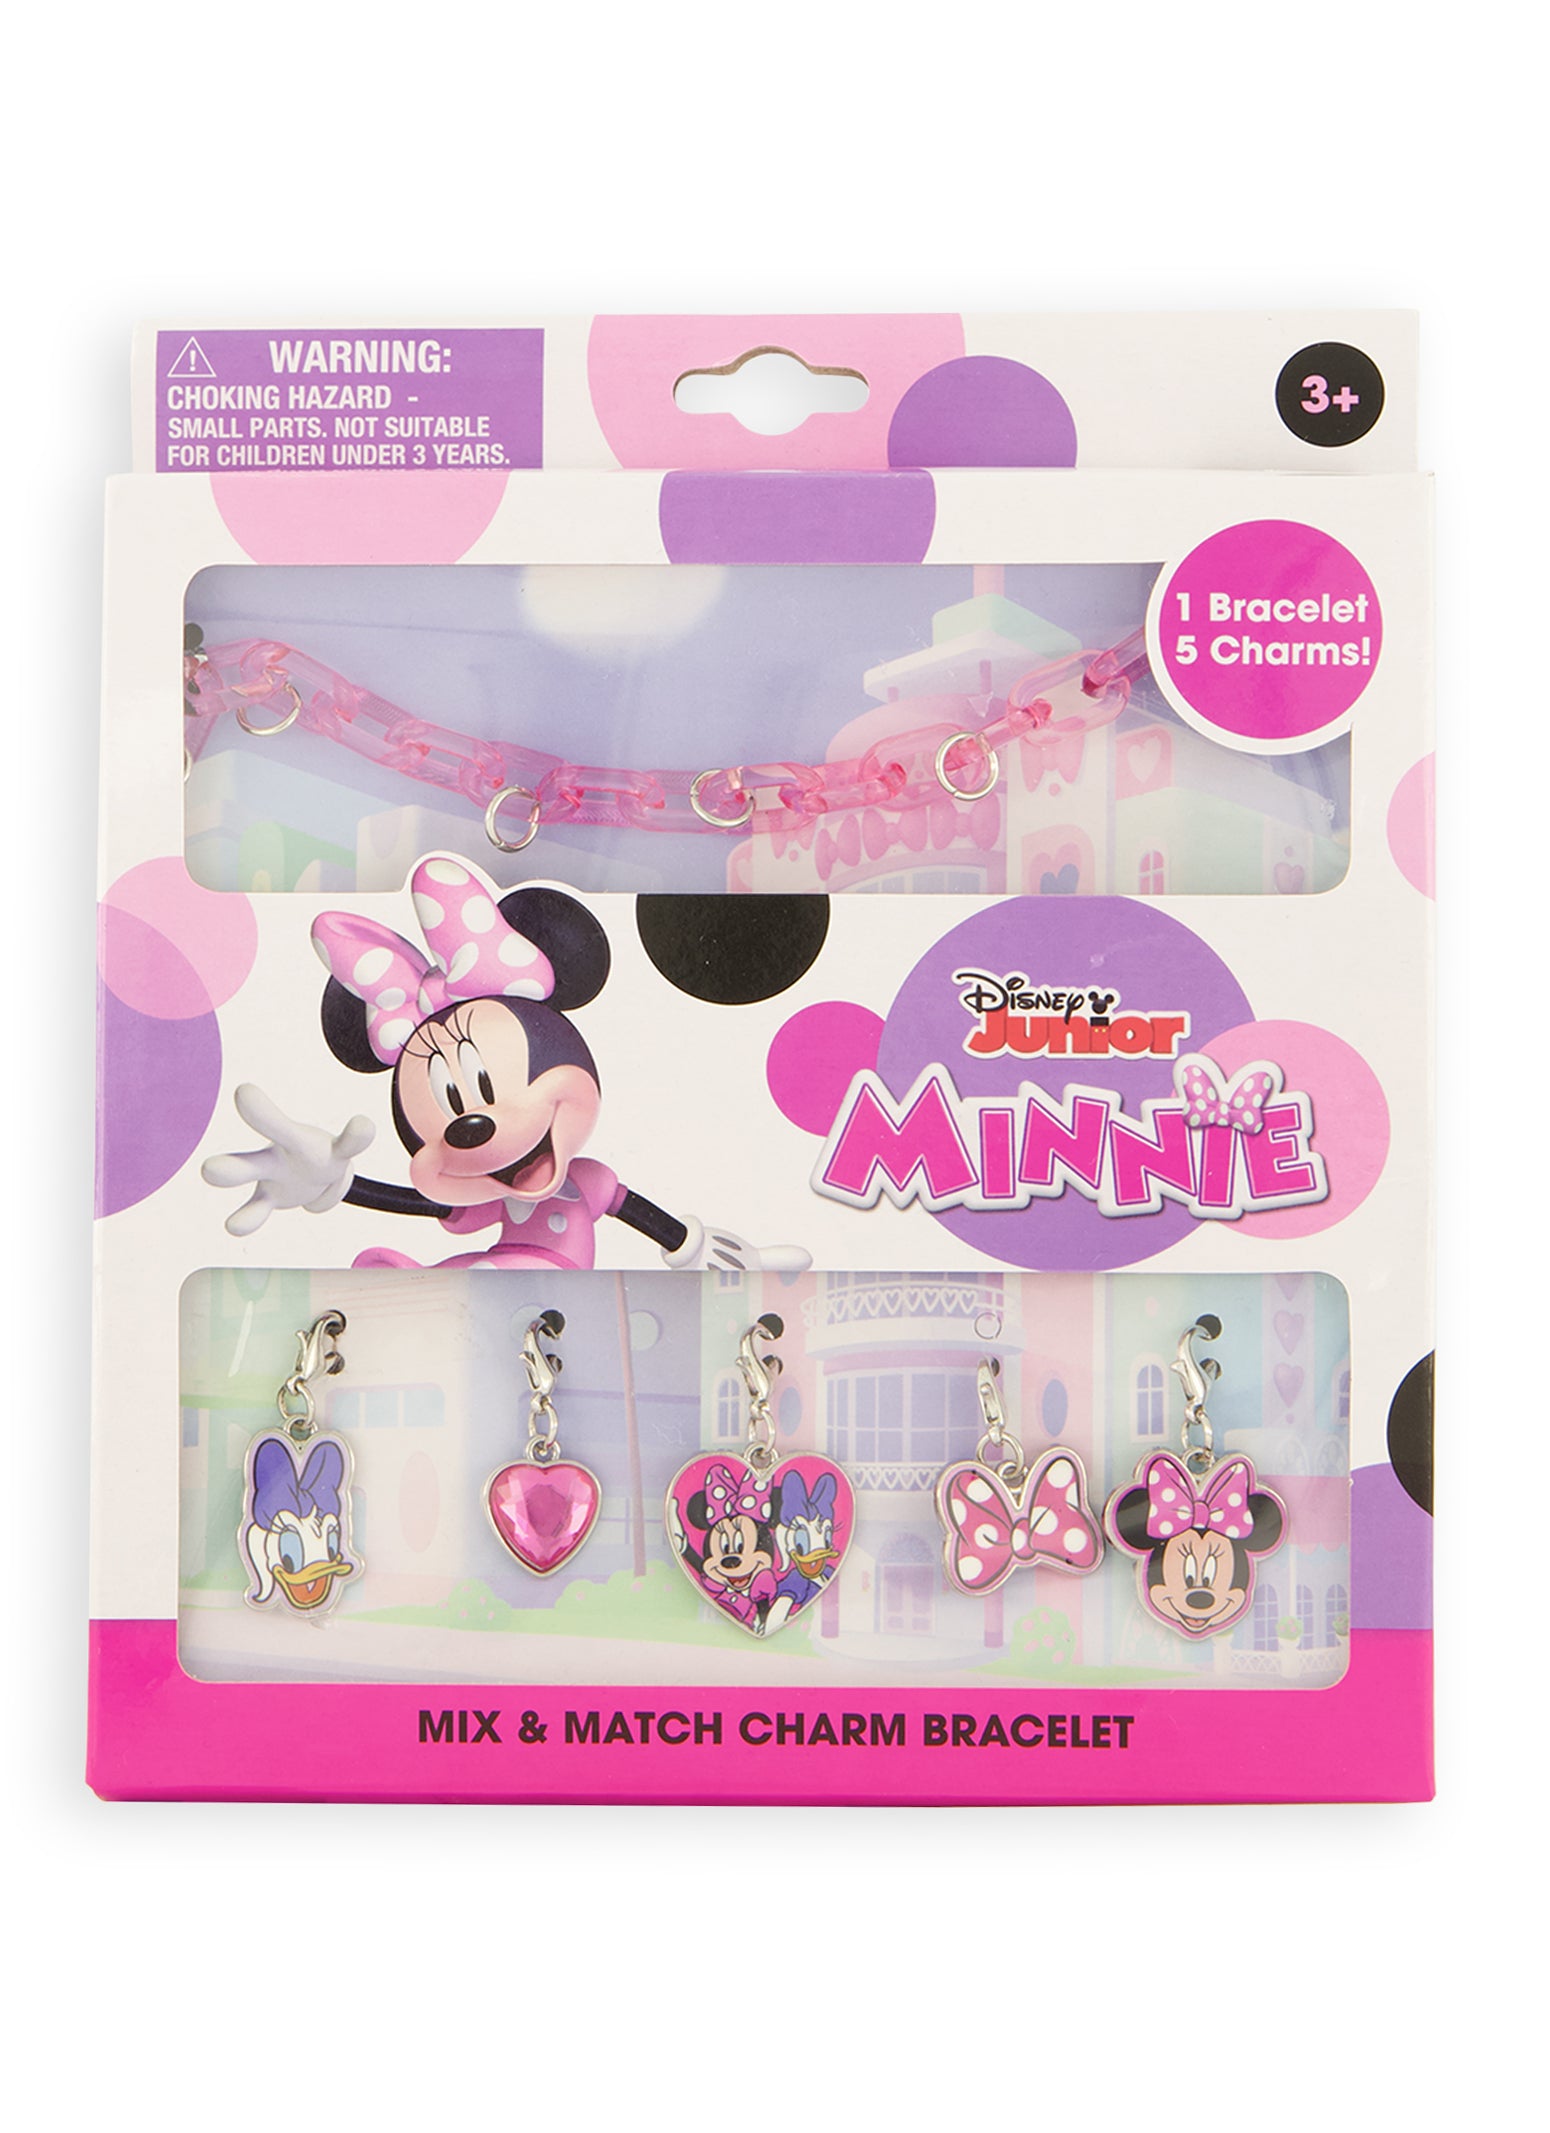 Disney Toddler Girls' Minnie Mouse Underwear and Tank Set